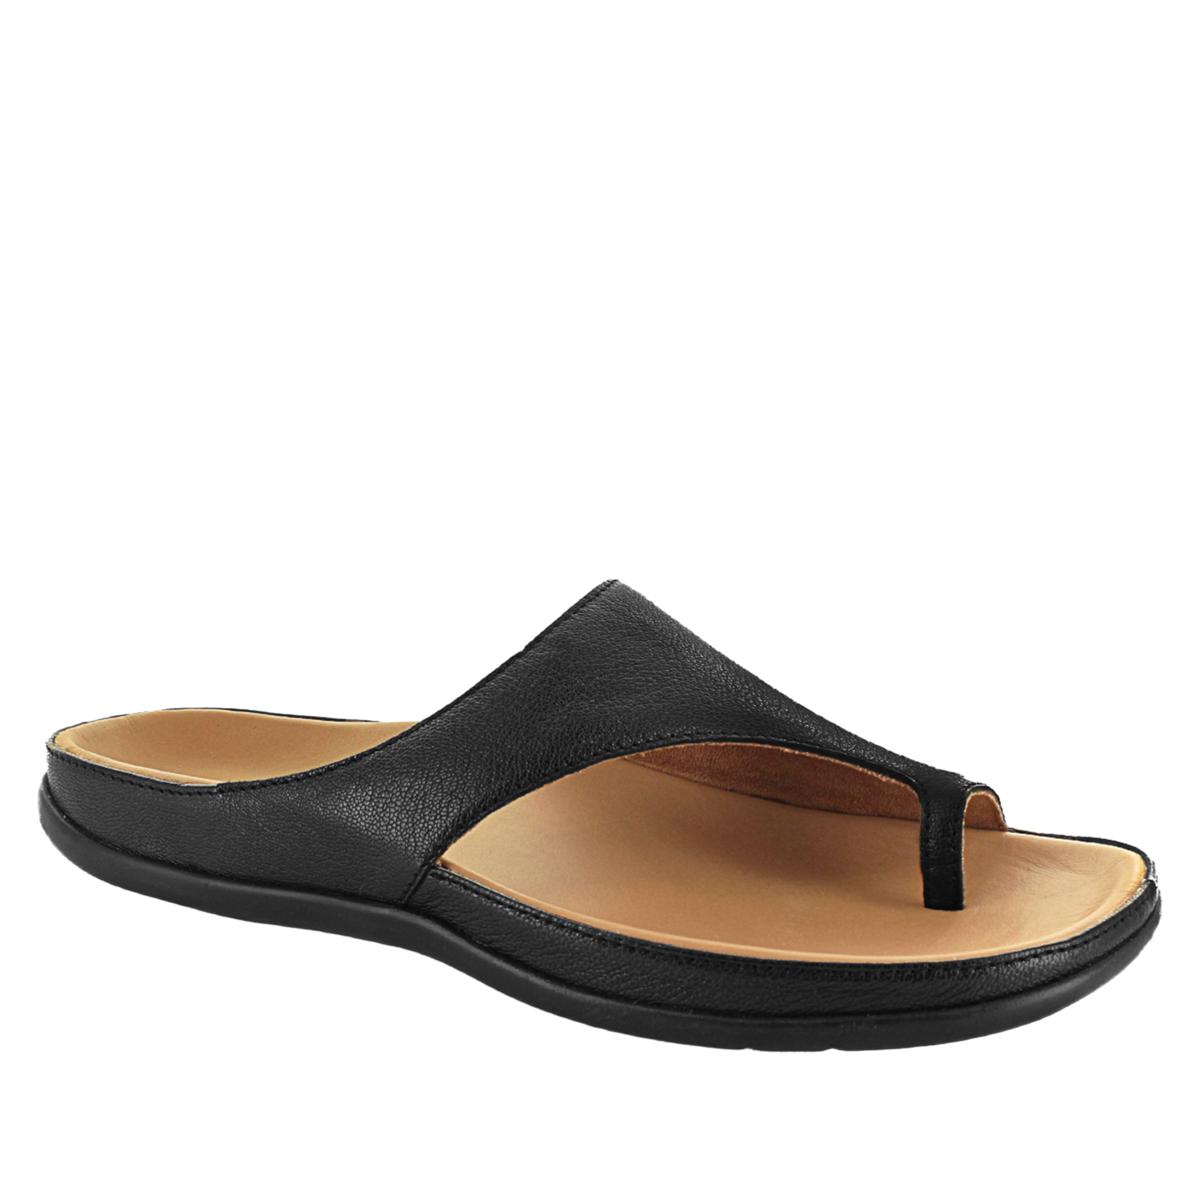 Strive Footwear Capri Black Sandal - All Mixed Up 